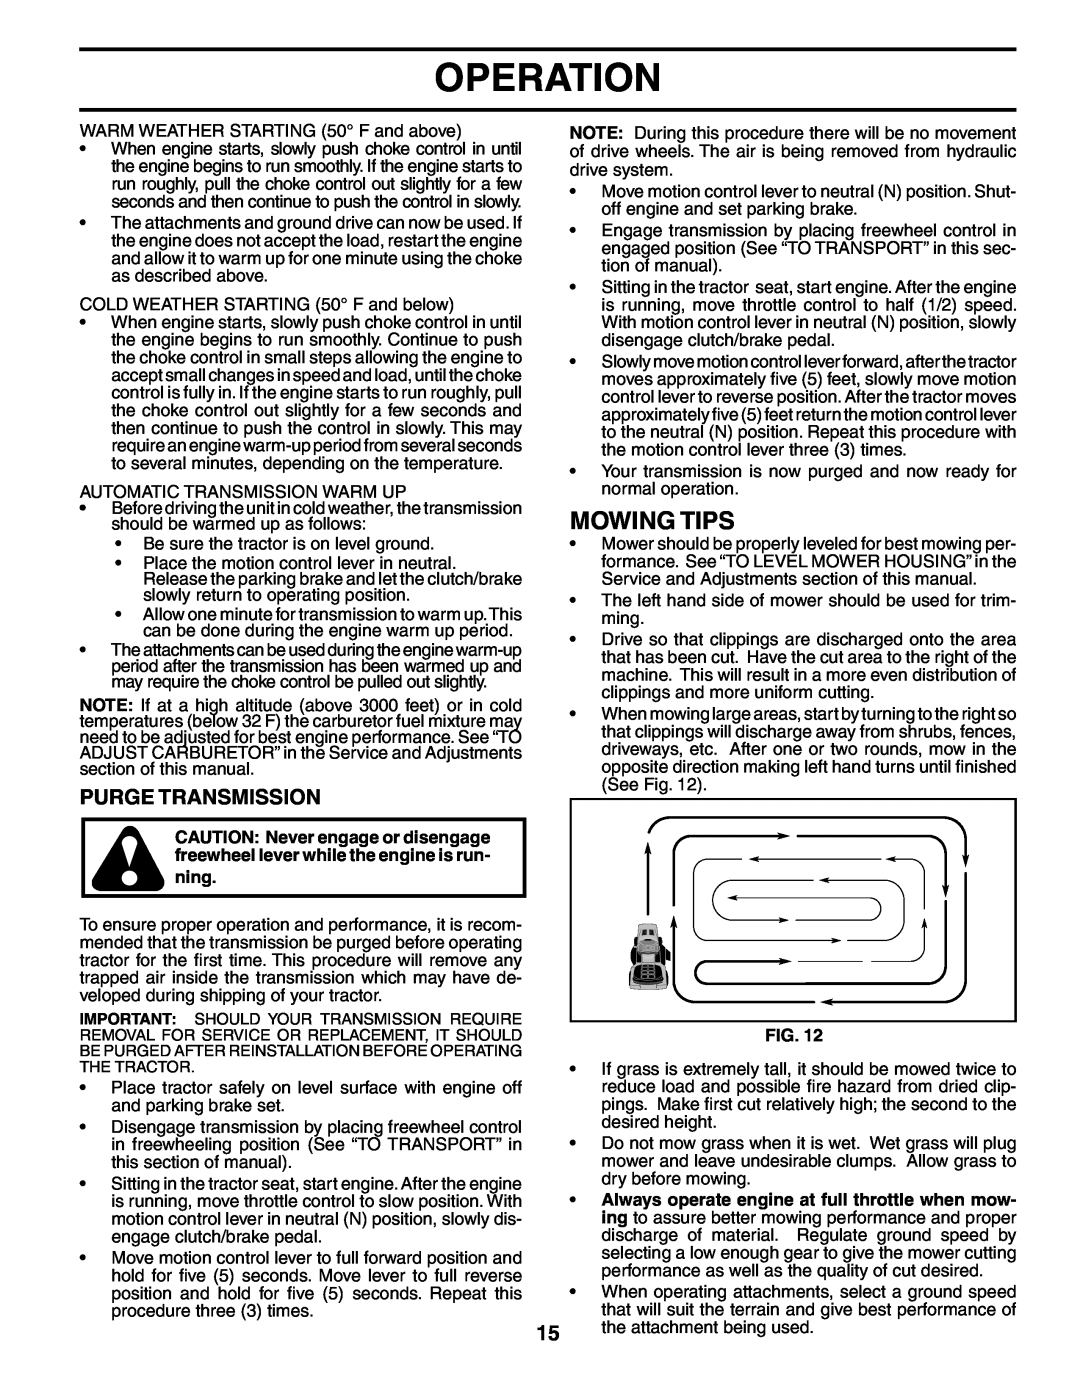 Poulan 195032 manual Mowing Tips, Purge Transmission, Operation 